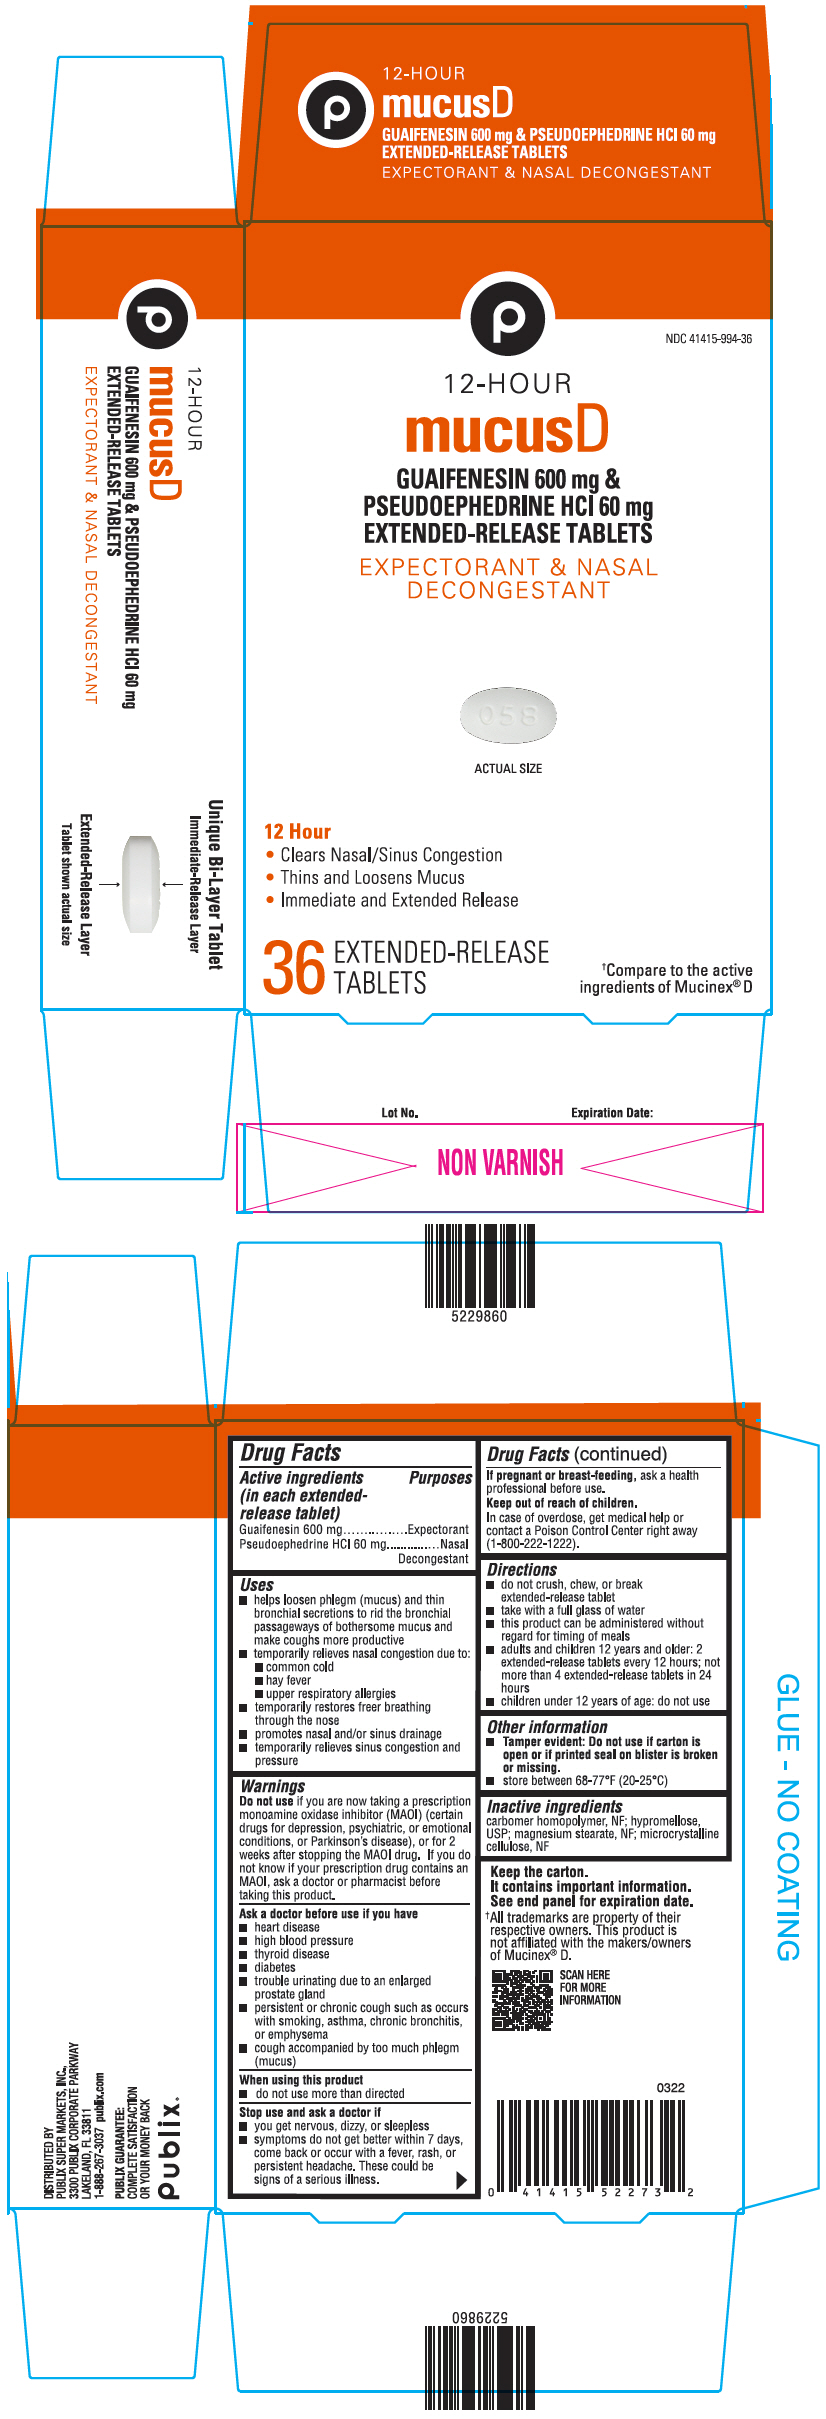 PRINCIPAL DISPLAY PANEL - 36 Tablet Blister Pack Carton